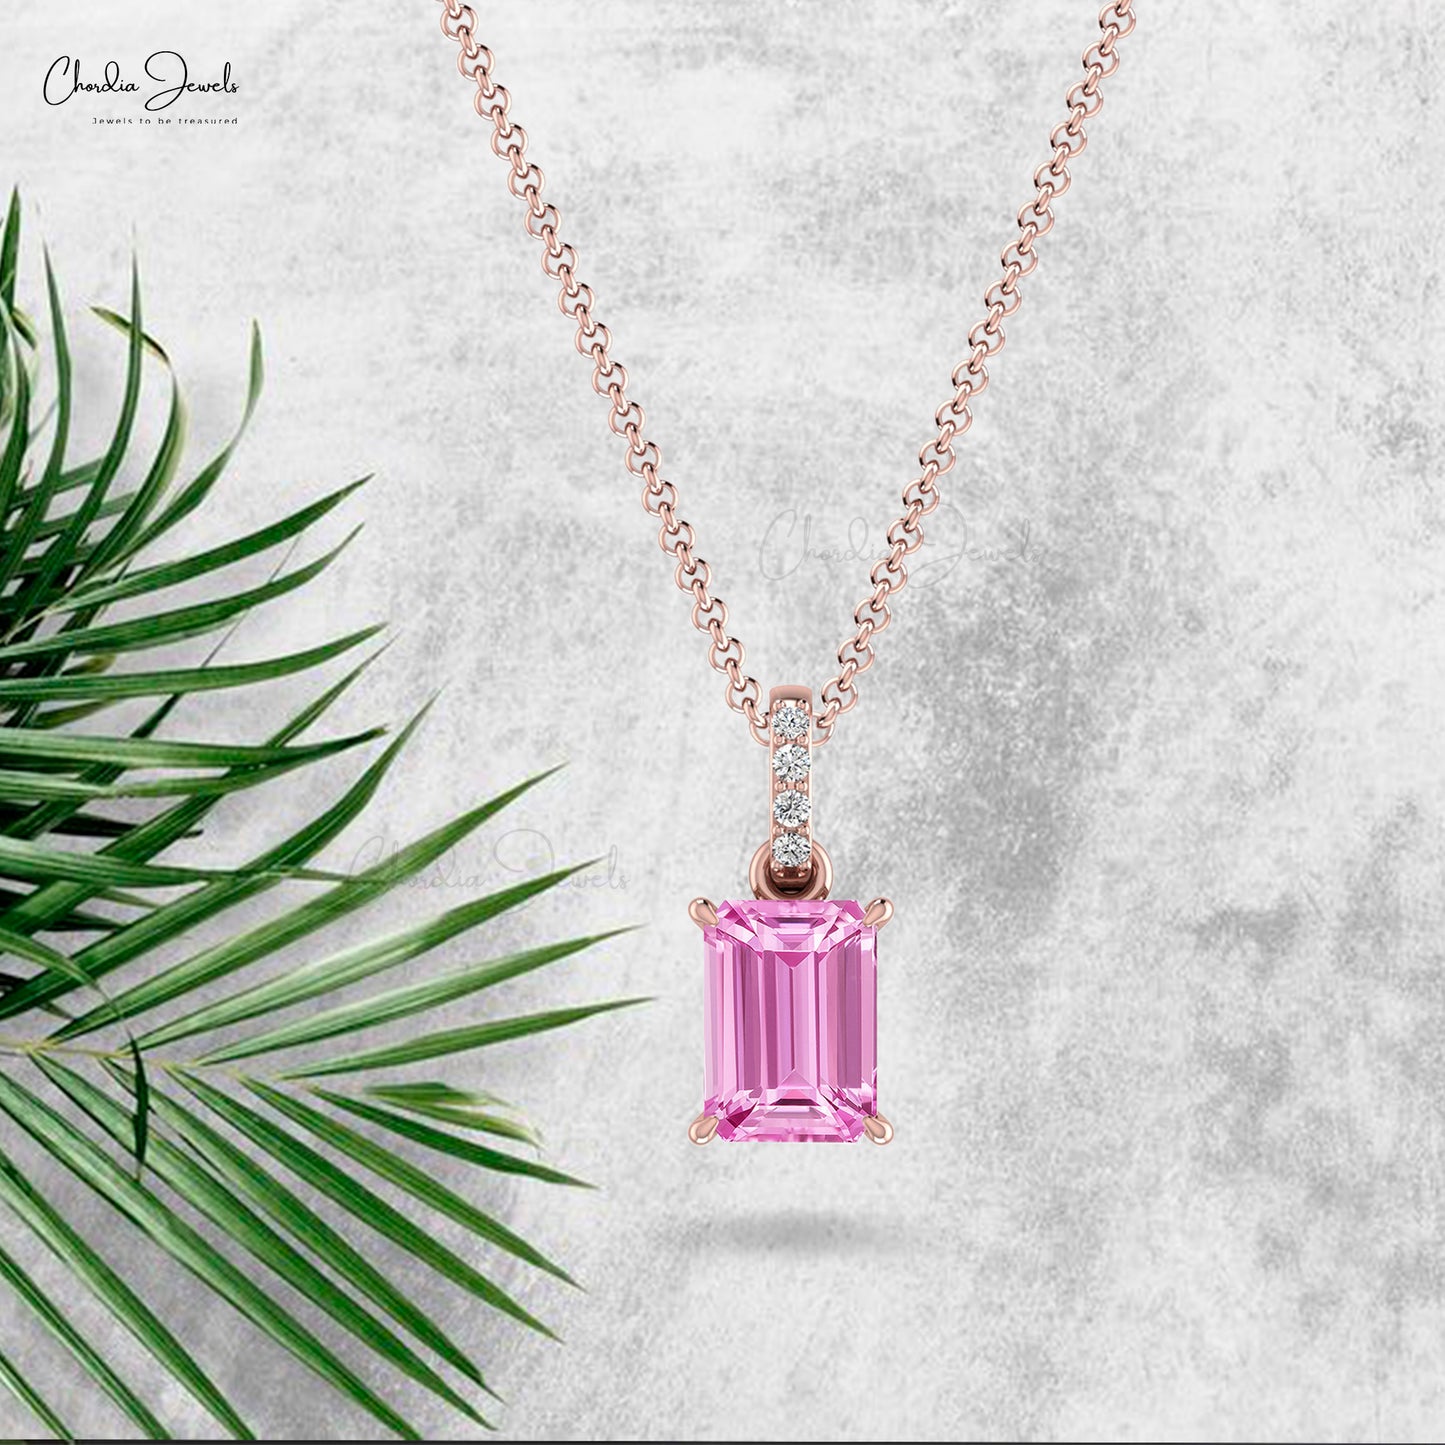 Natural Pink Sapphire Emerald Cut Pendant 14k Solid Gold Diamond 7X5mm Gemstone Dangling Handmade Pendant For Women